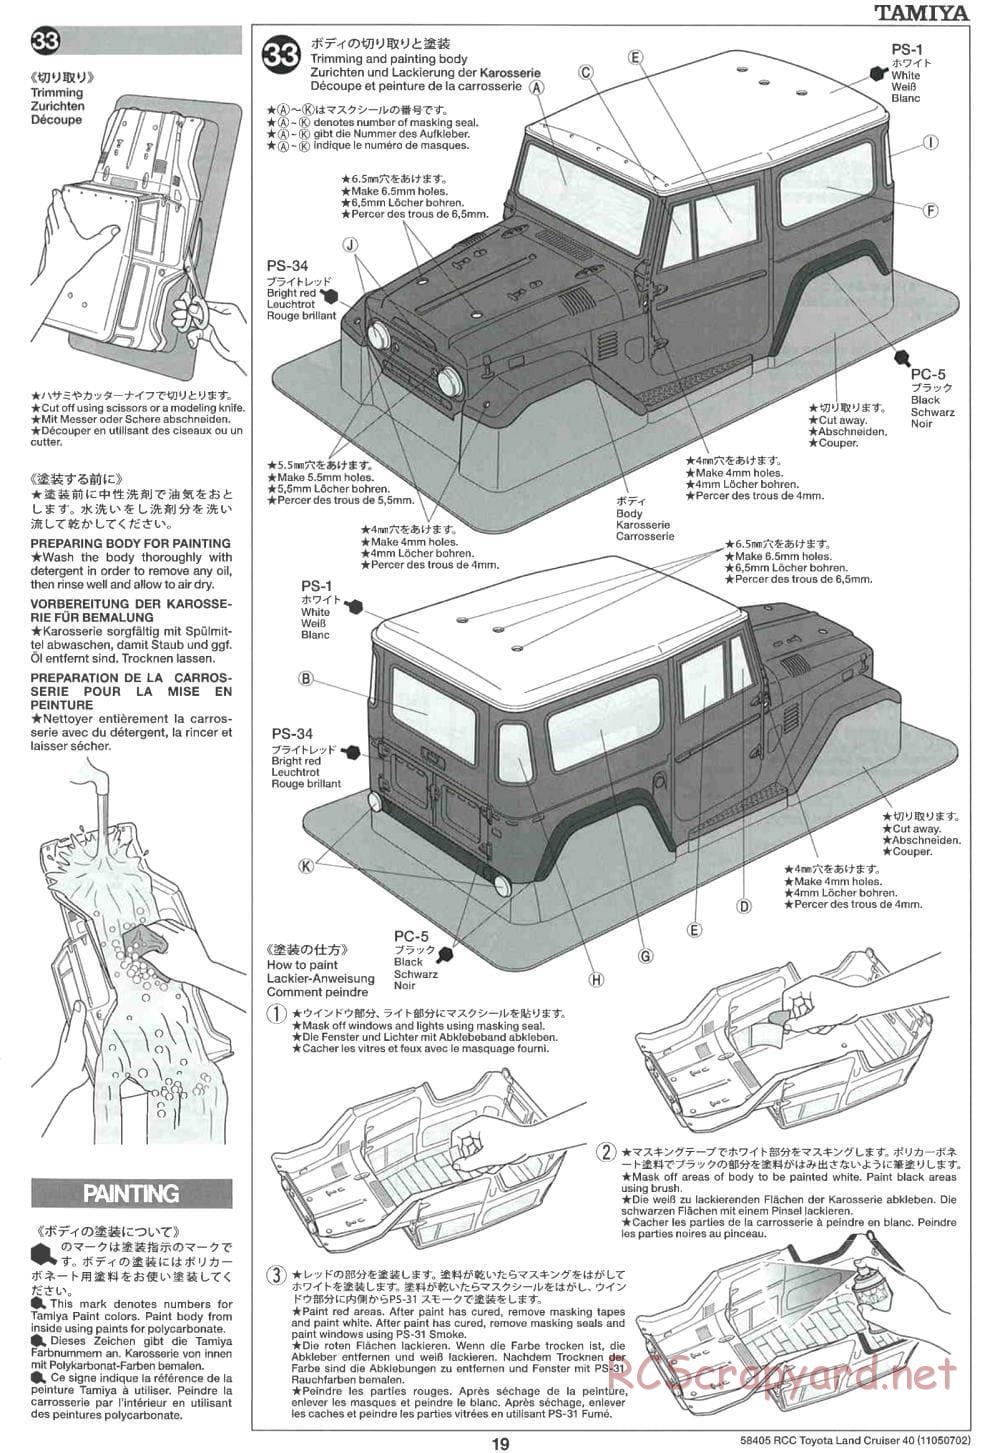 Tamiya - Toyota Land Cruiser 40 - CR-01 Chassis - Manual - Page 19